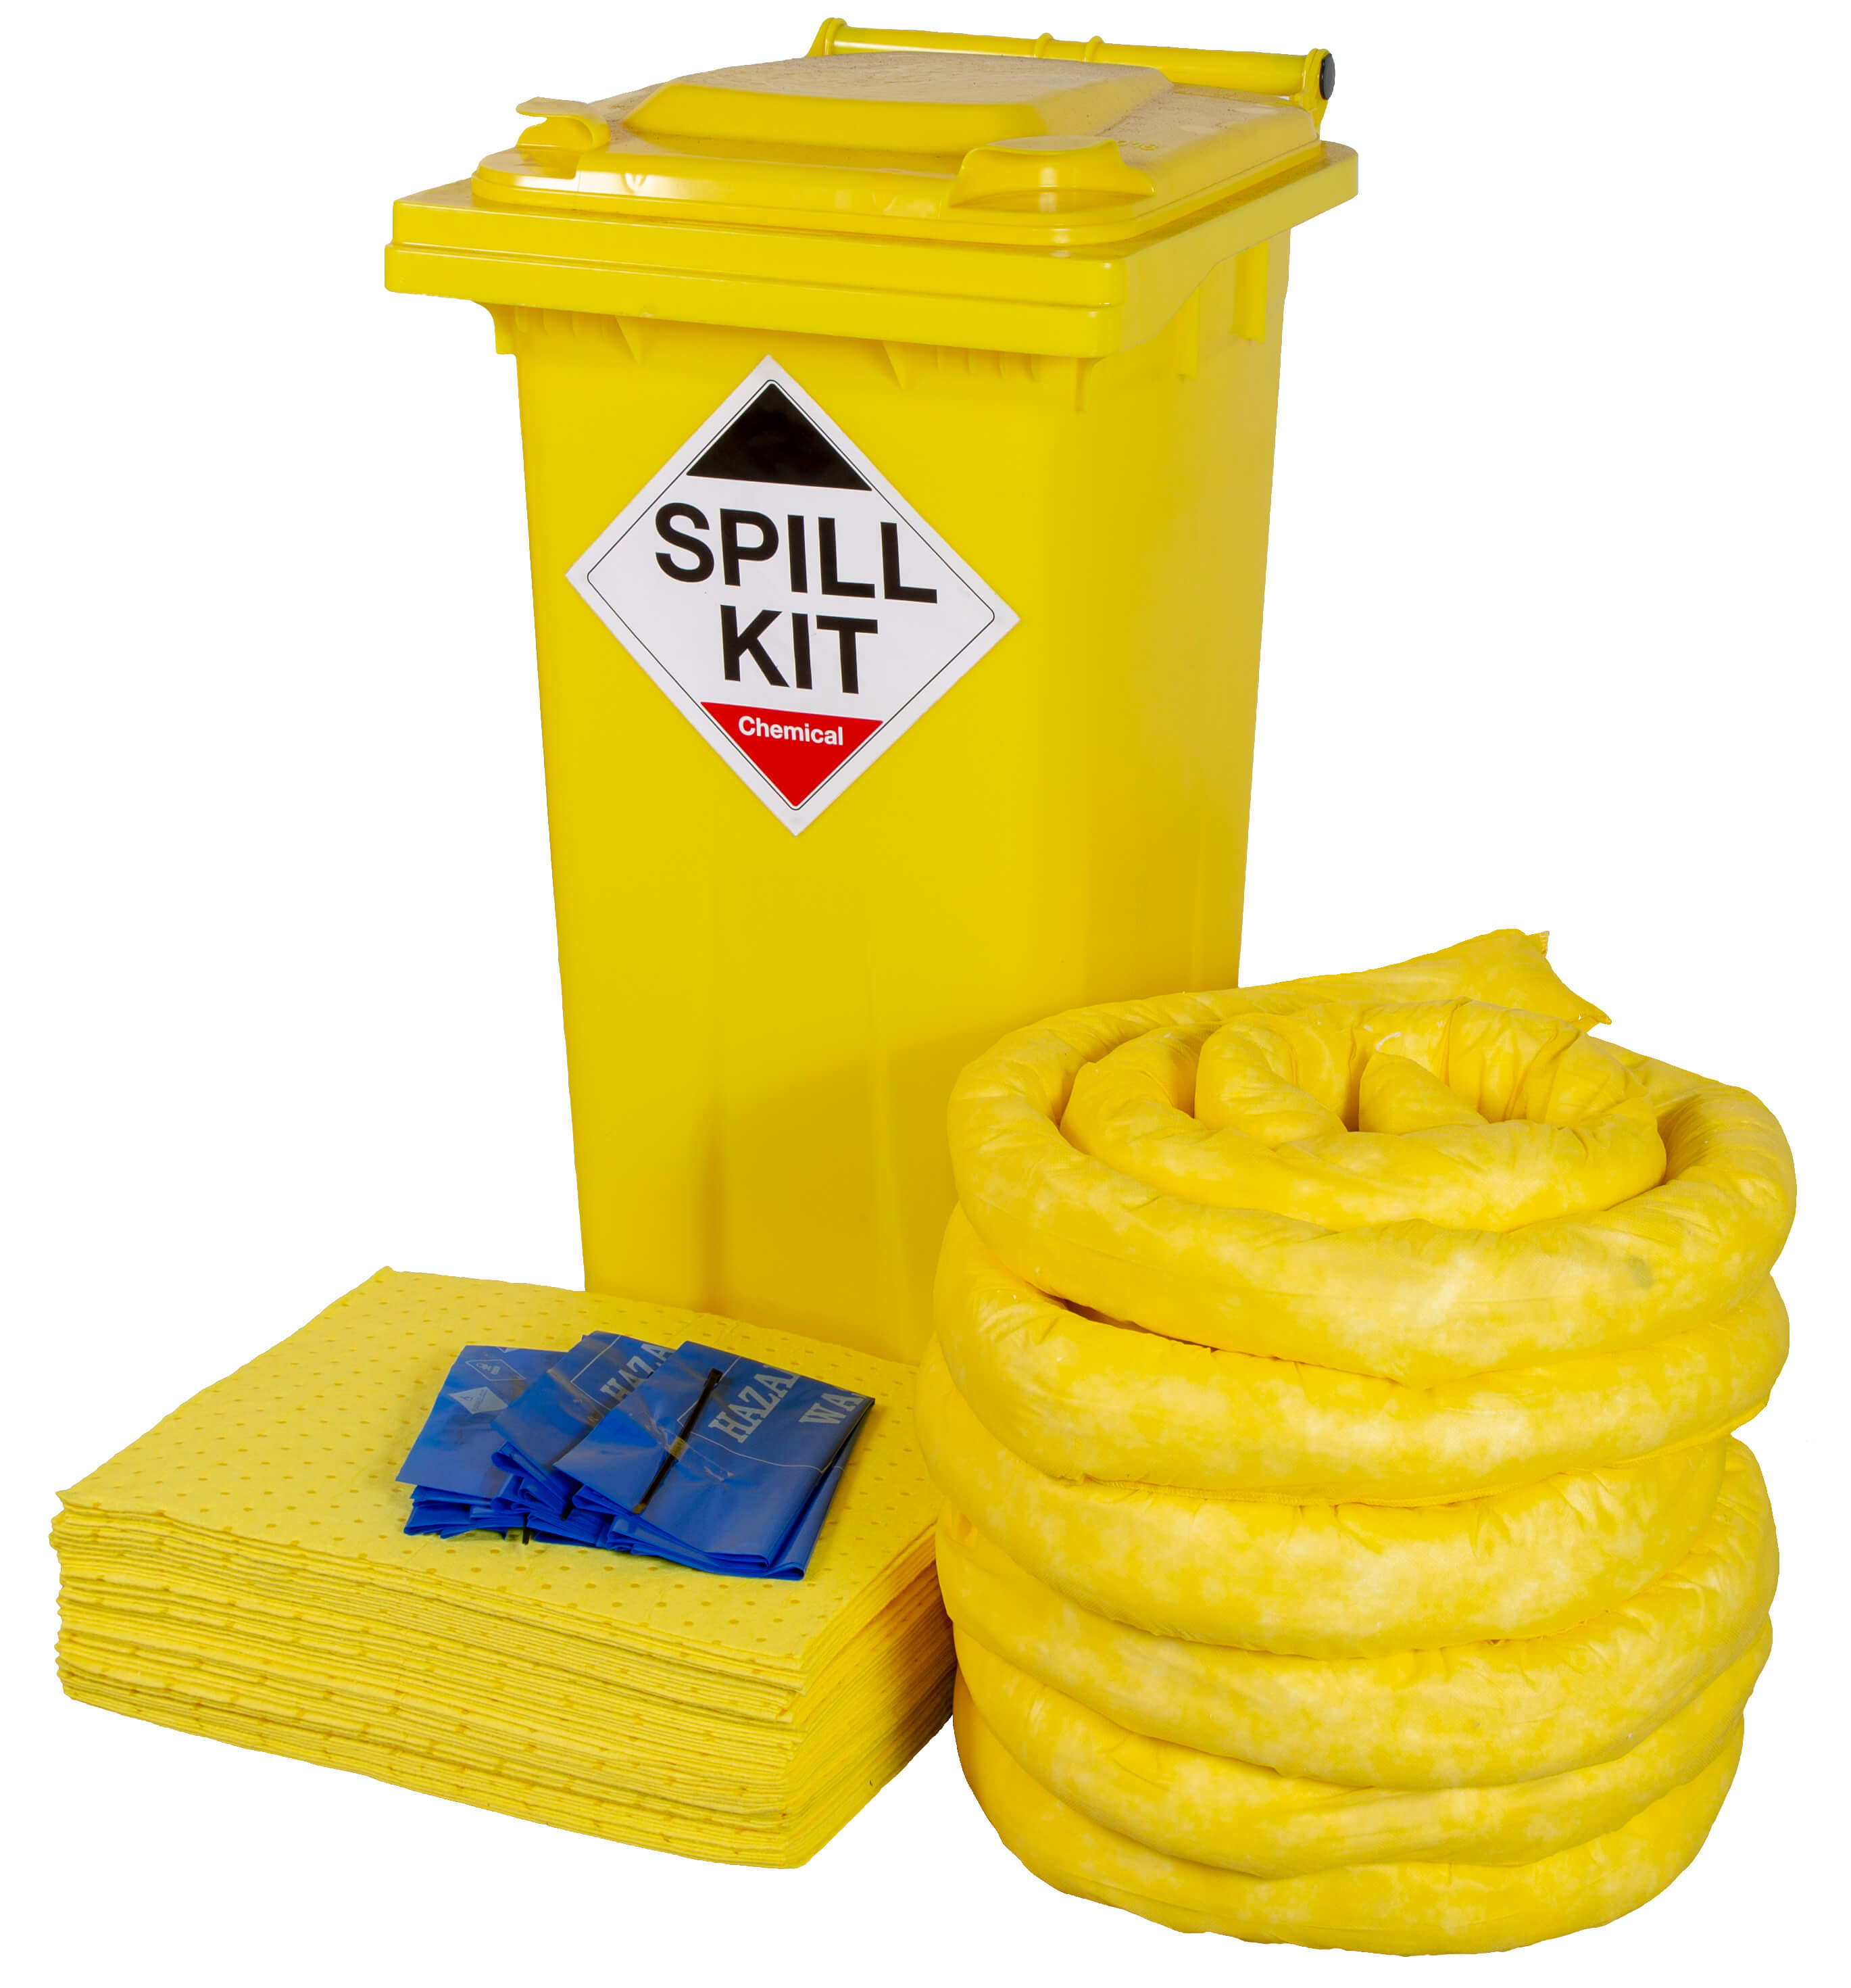 Chemical Kit - Yellow Wheelie  Bin